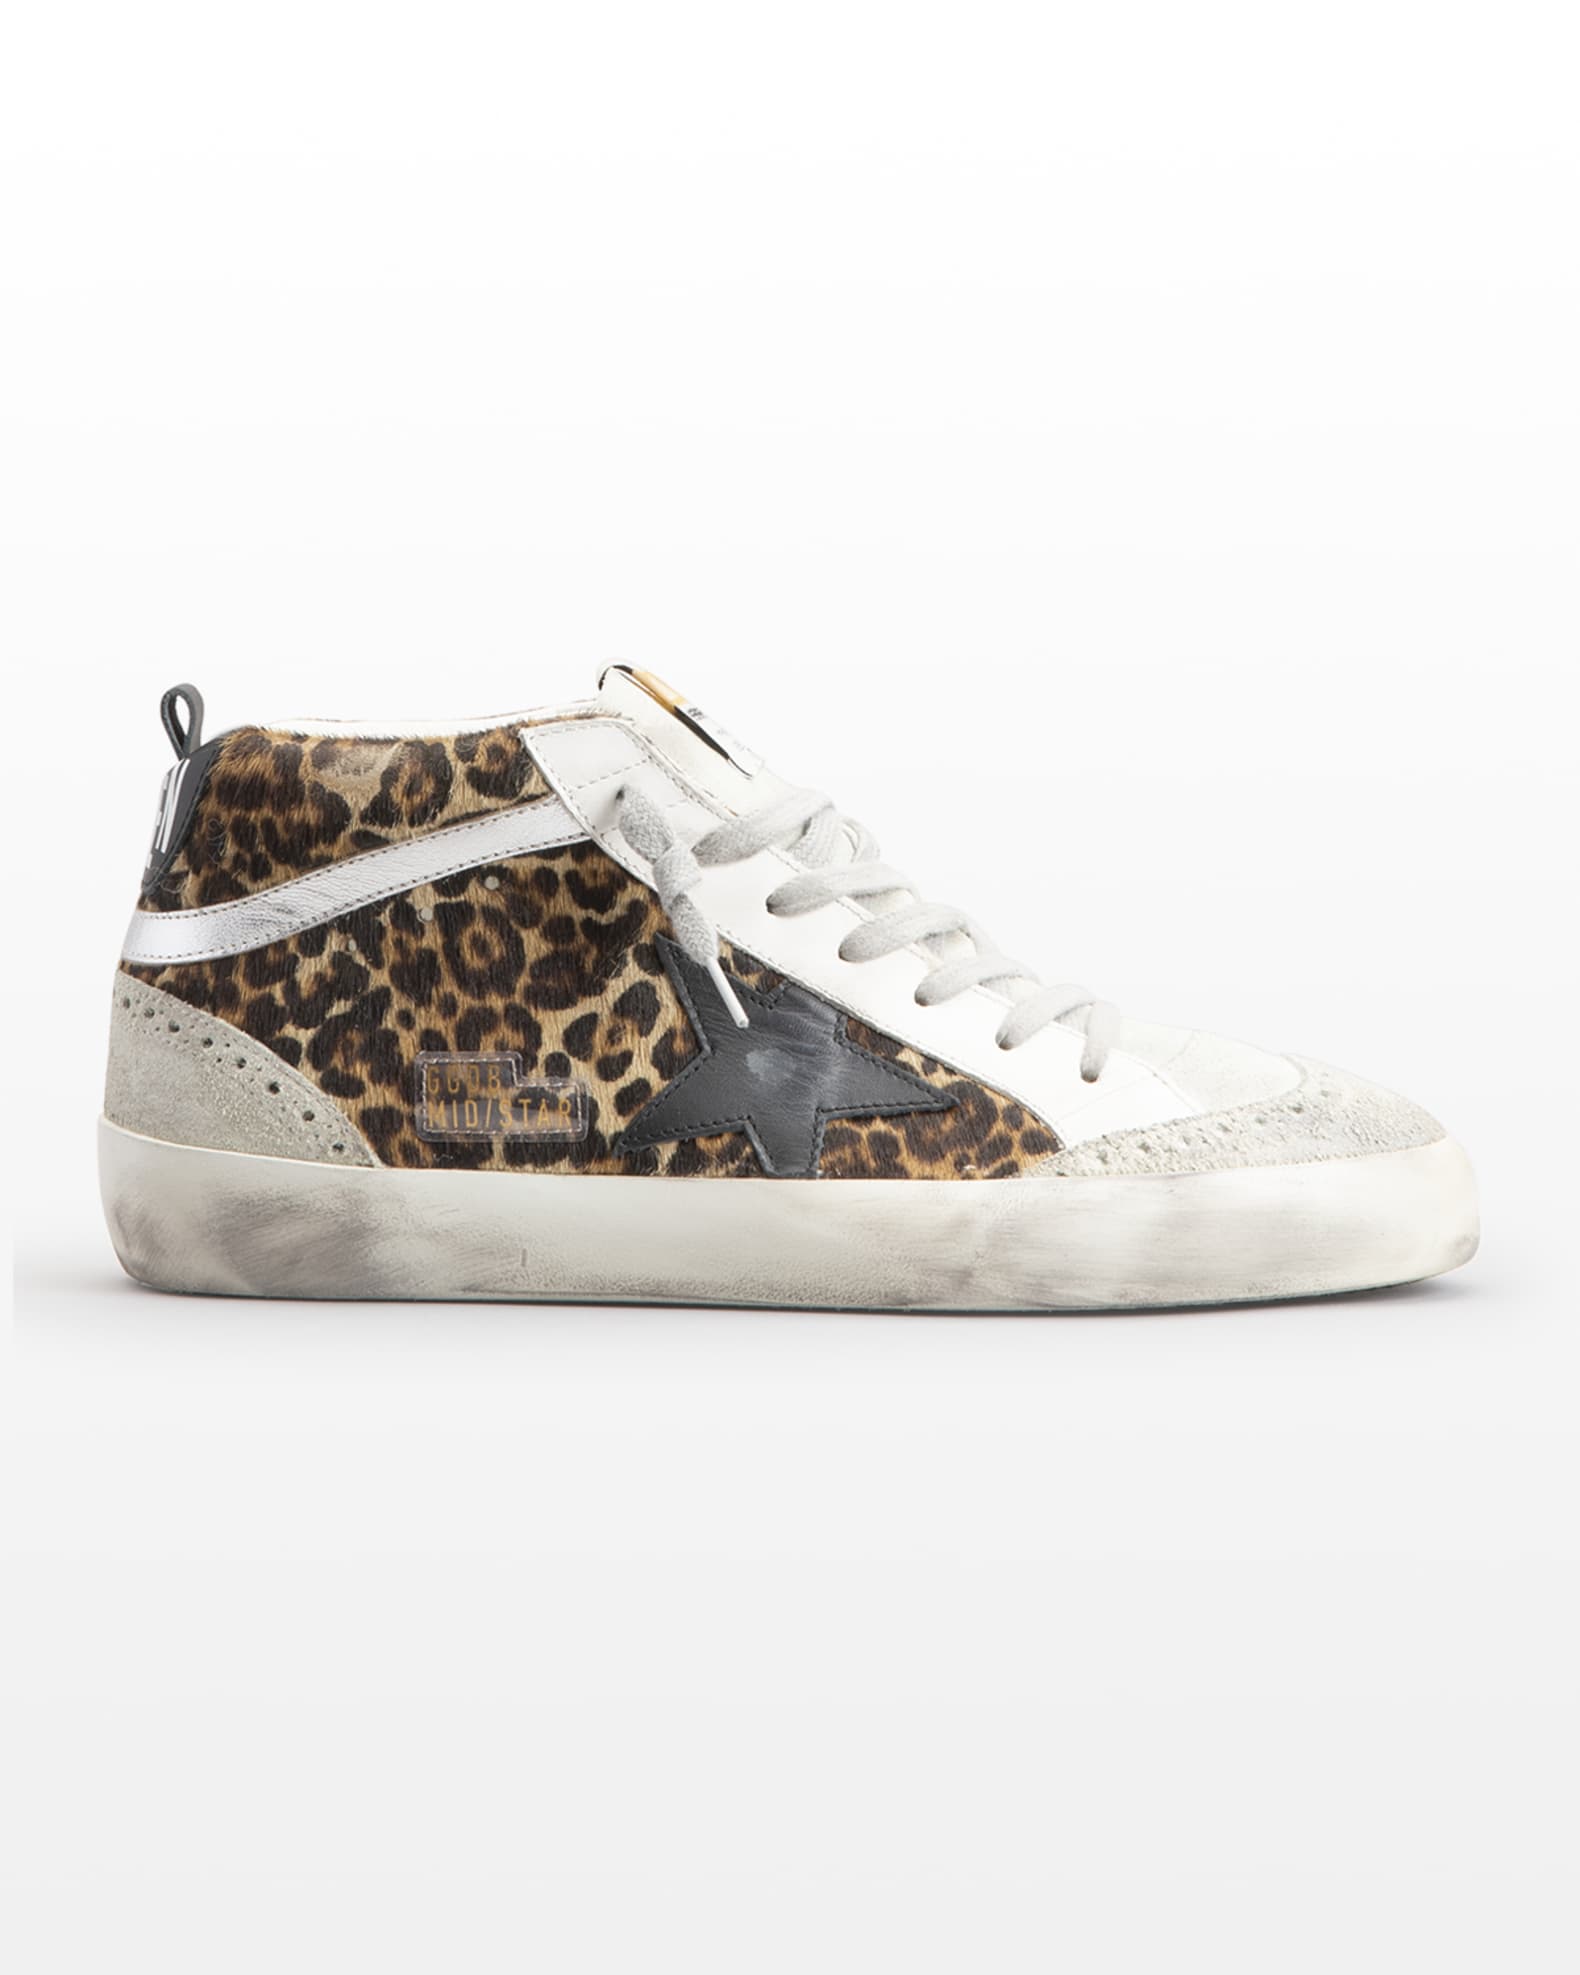 Leopard print sneakers from Golden Goose